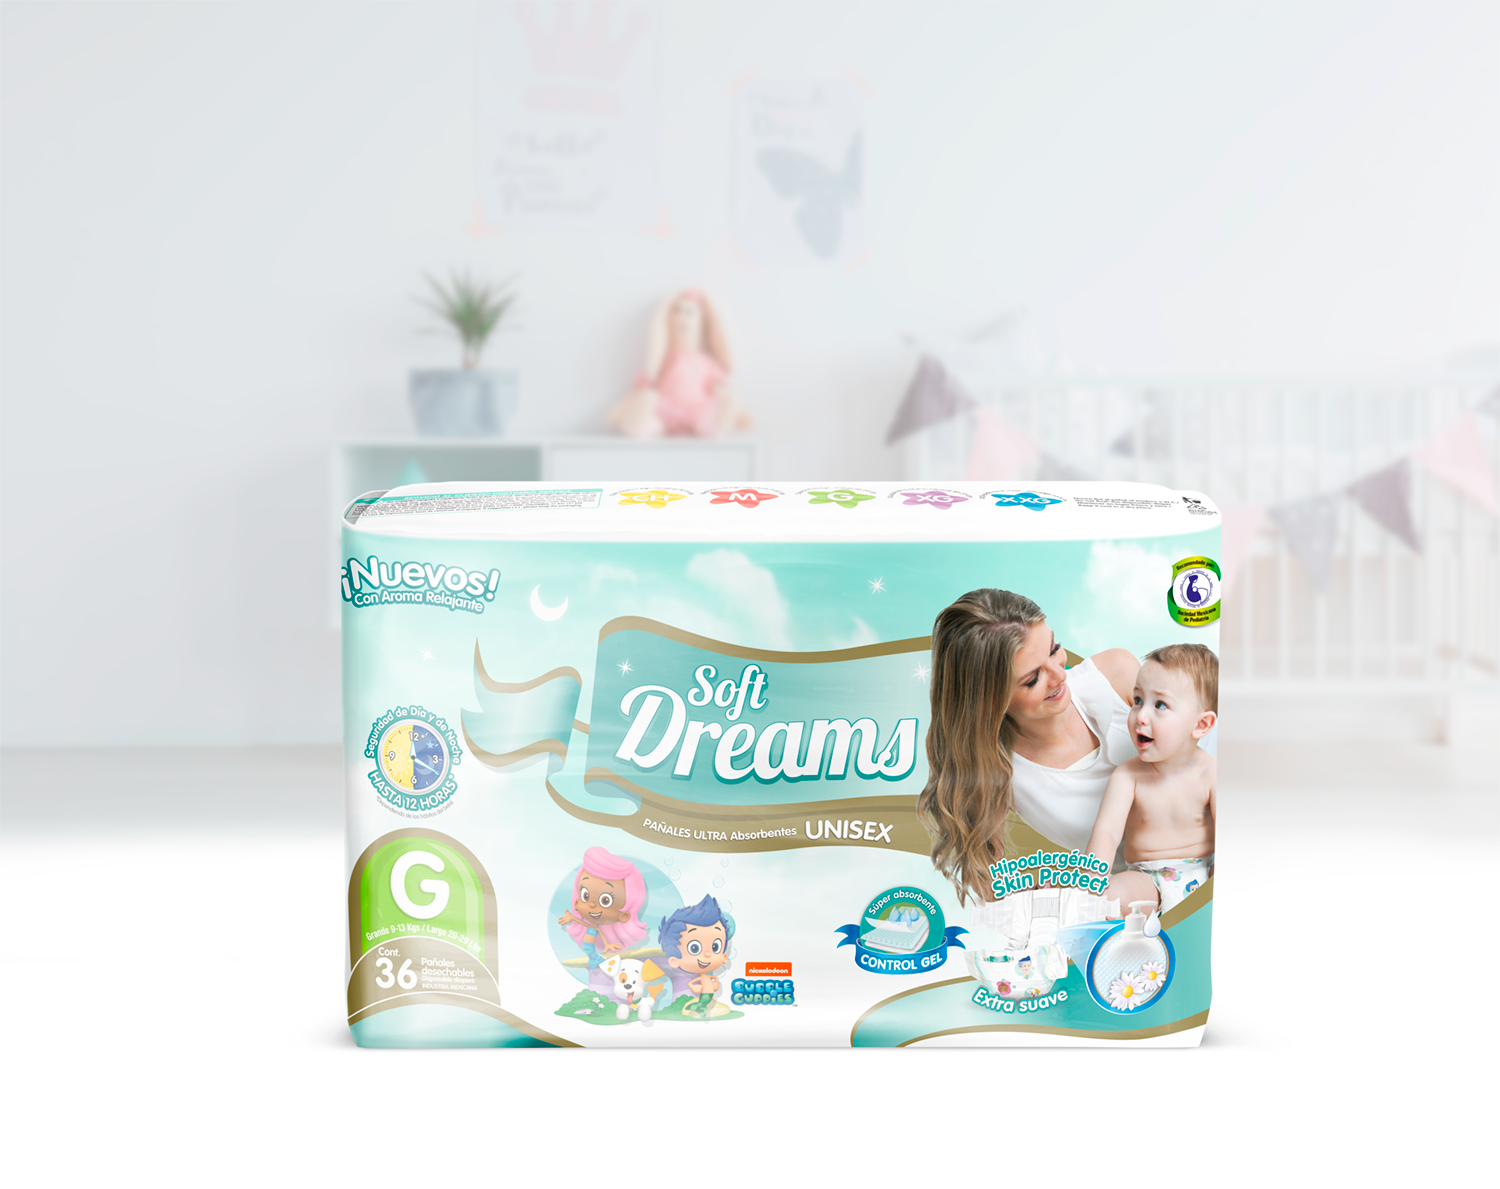 Soft Dreams Packaging Design